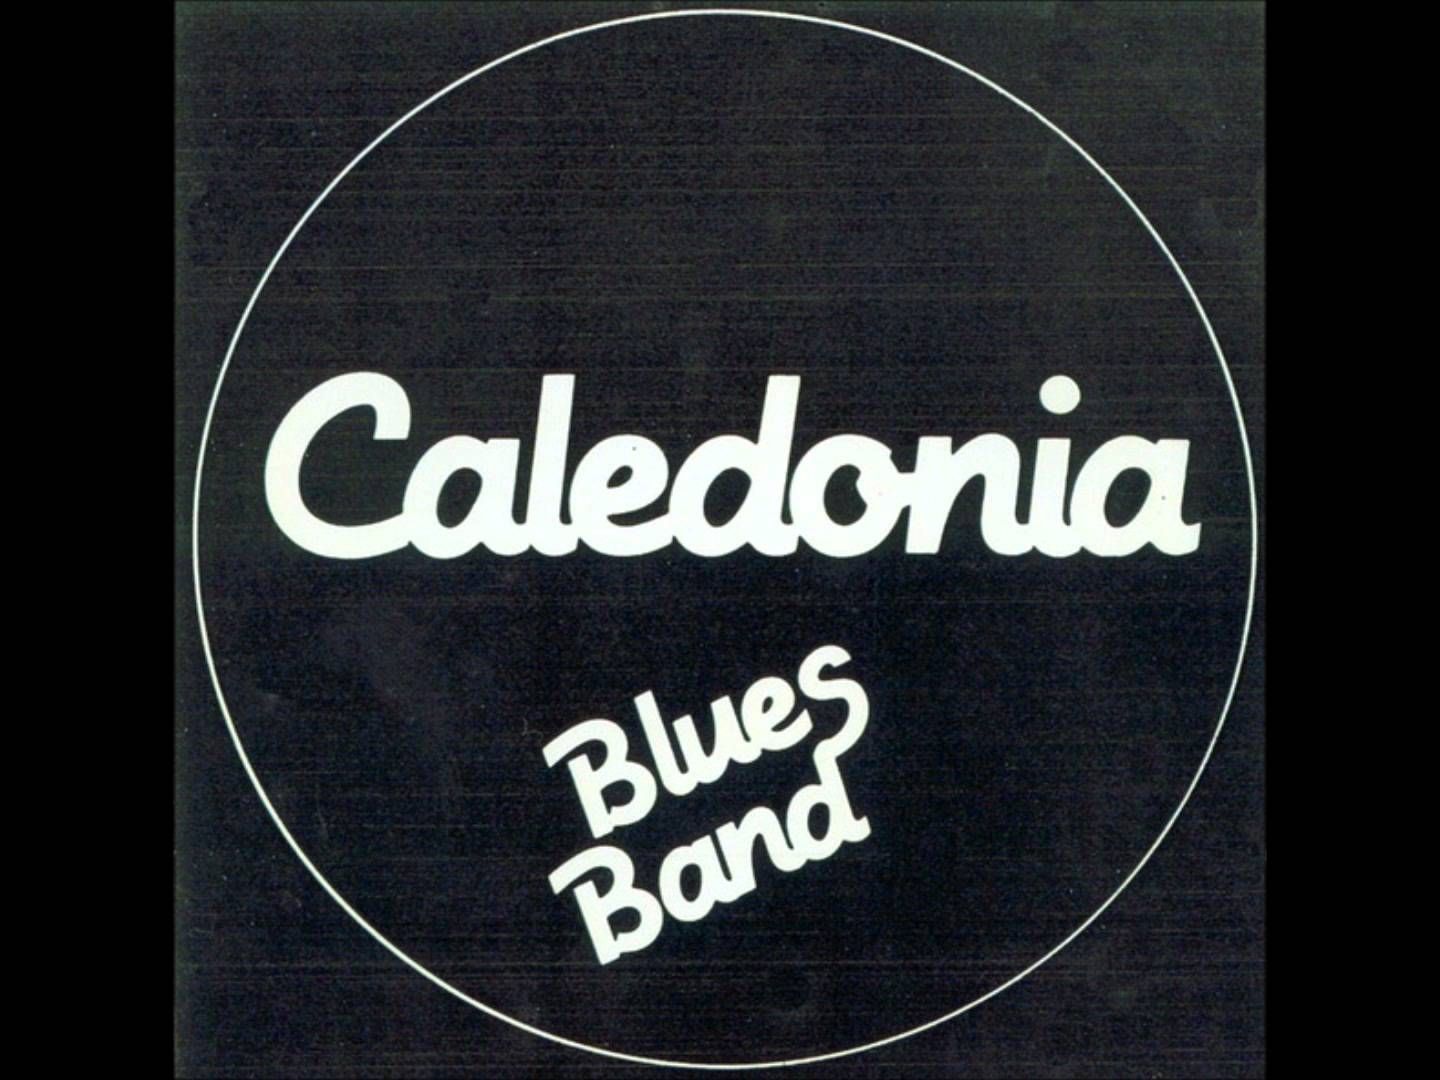 maxresdefault 14 - Caledonia Blues Band - Caledonia Blues Band